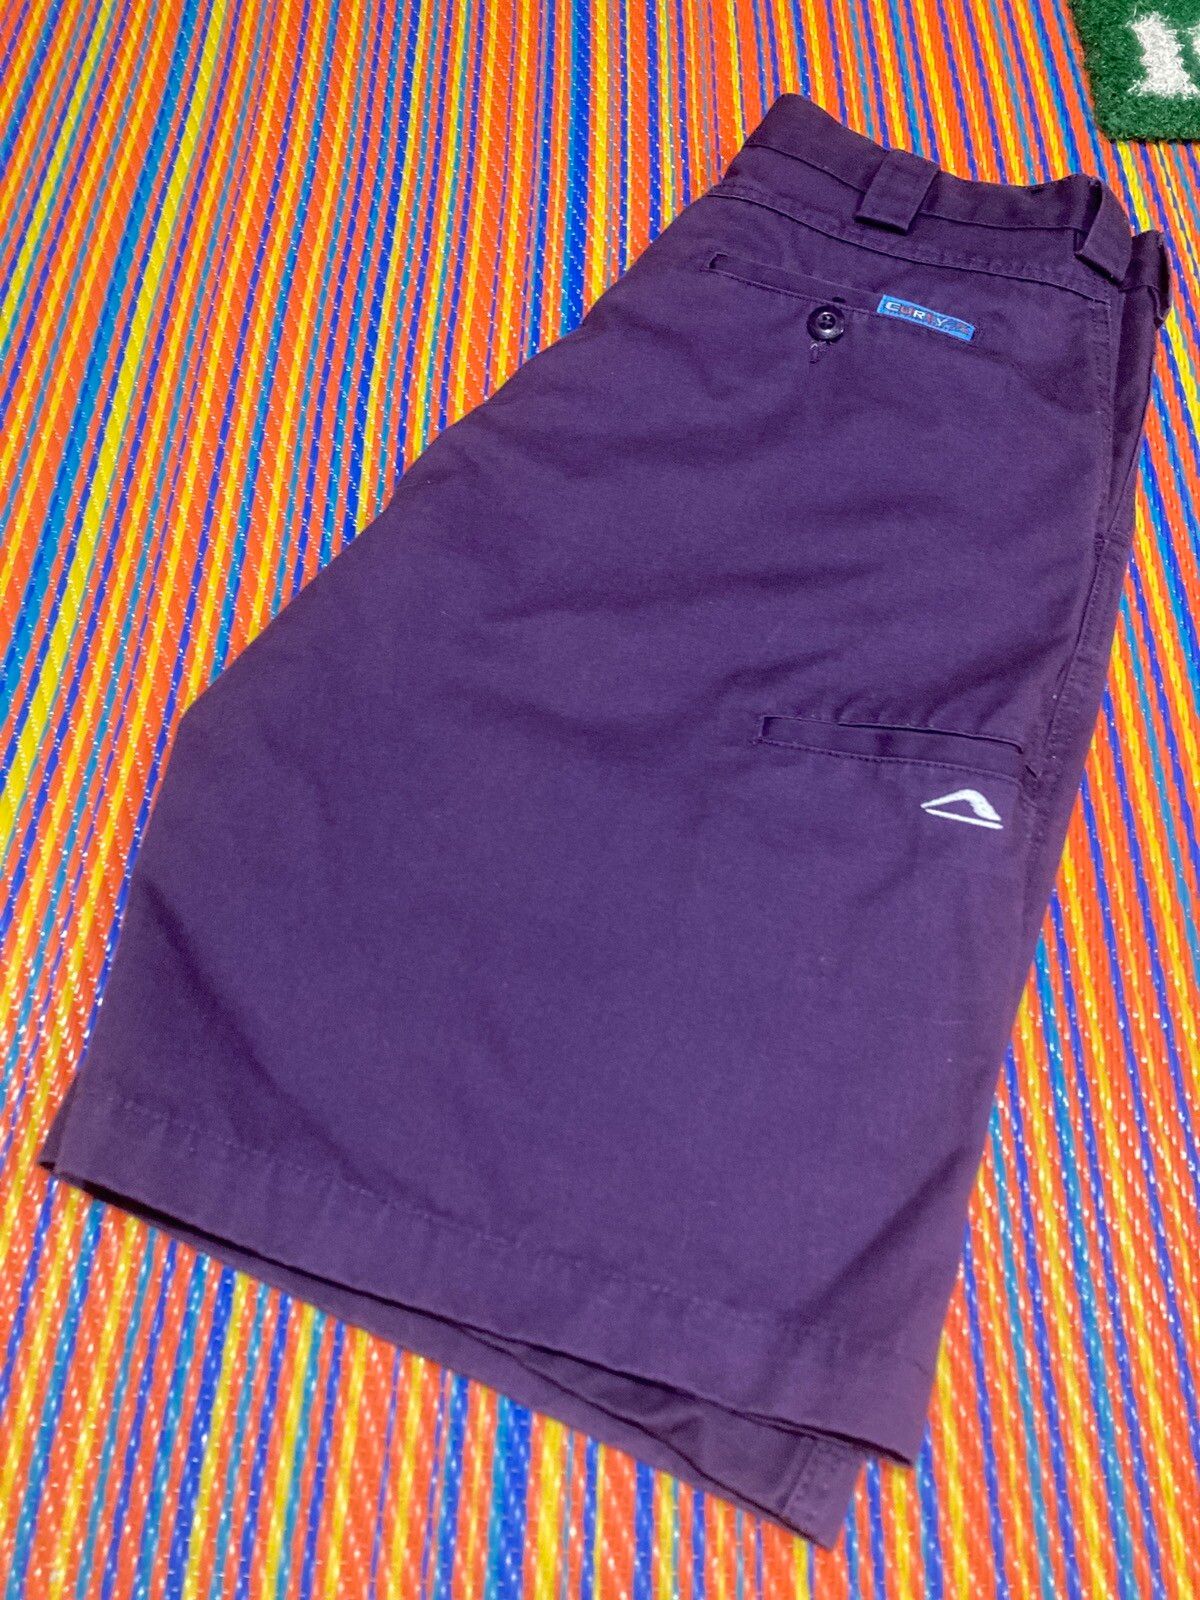 Vintage vintage 90’s y2k curly purple baggy work skate shorts Size US 38 / EU 54 - 1 Preview